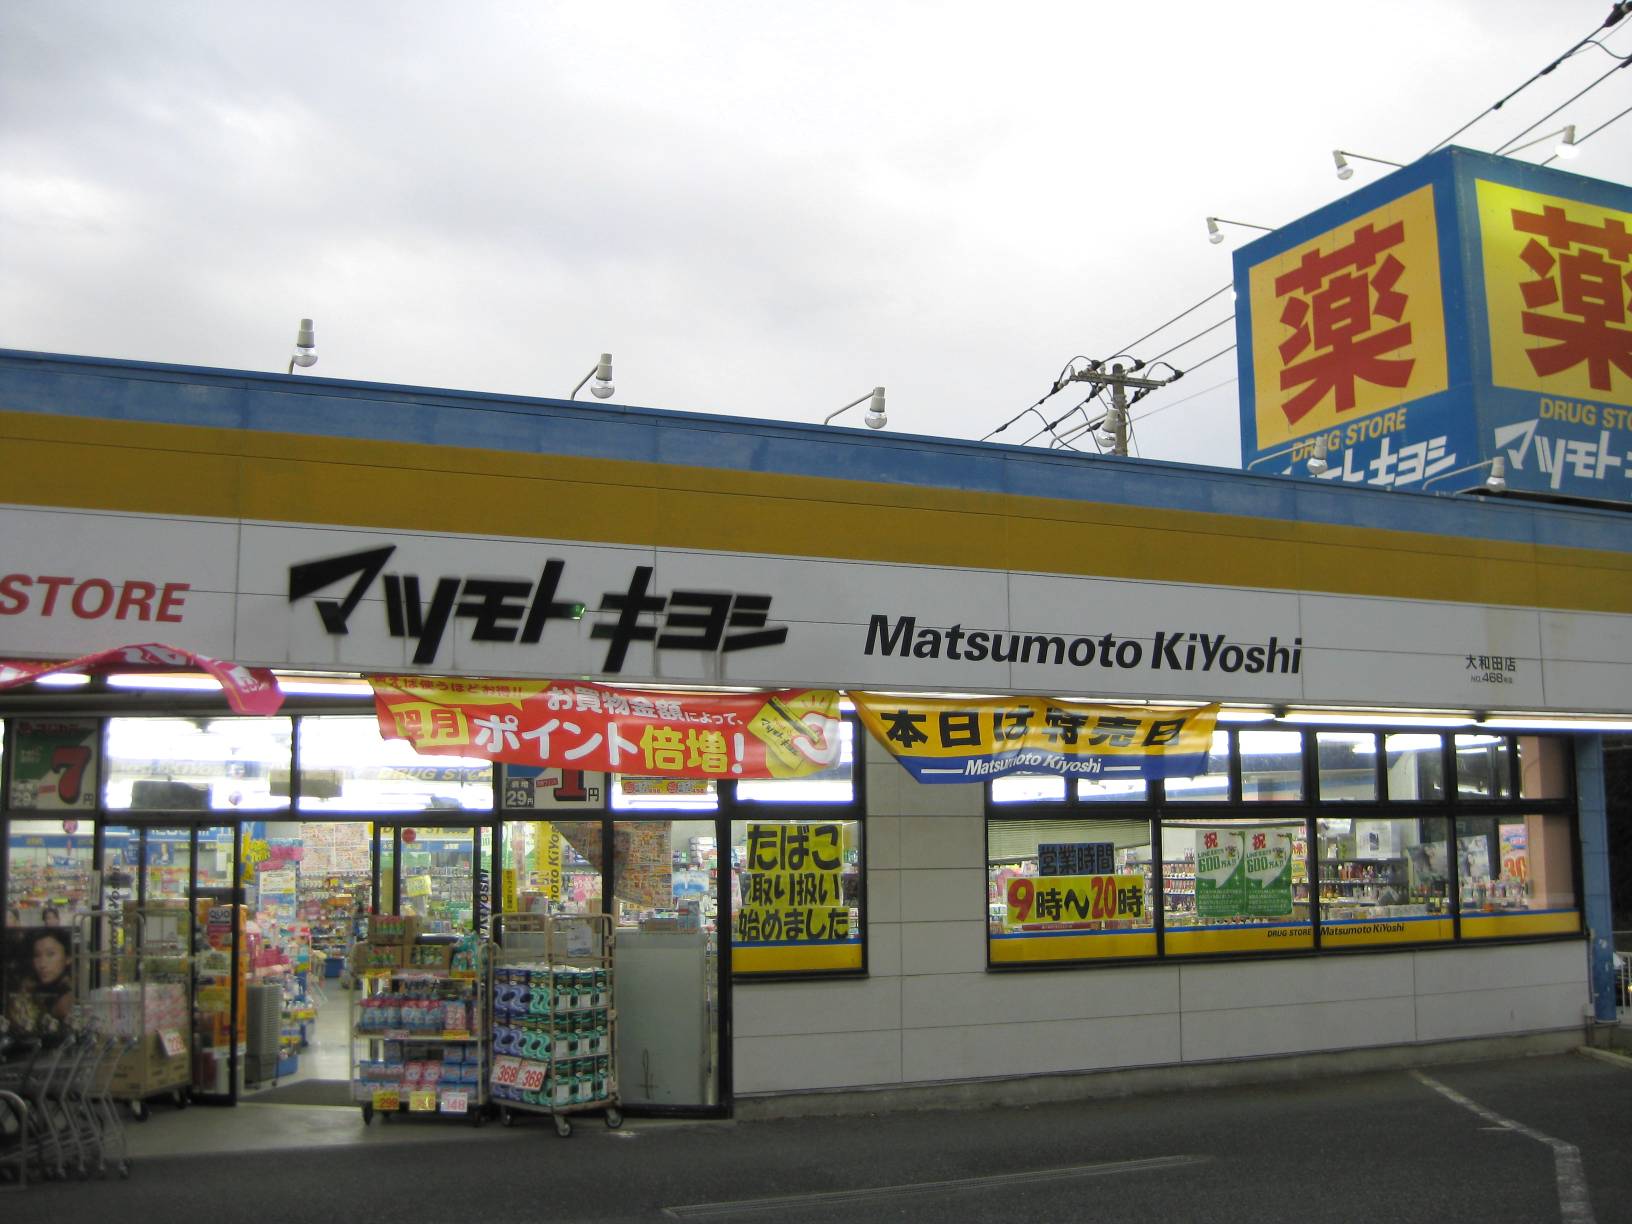 Dorakkusutoa. Drugstore Matsumotokiyoshi Owada store 990m to (drugstore)